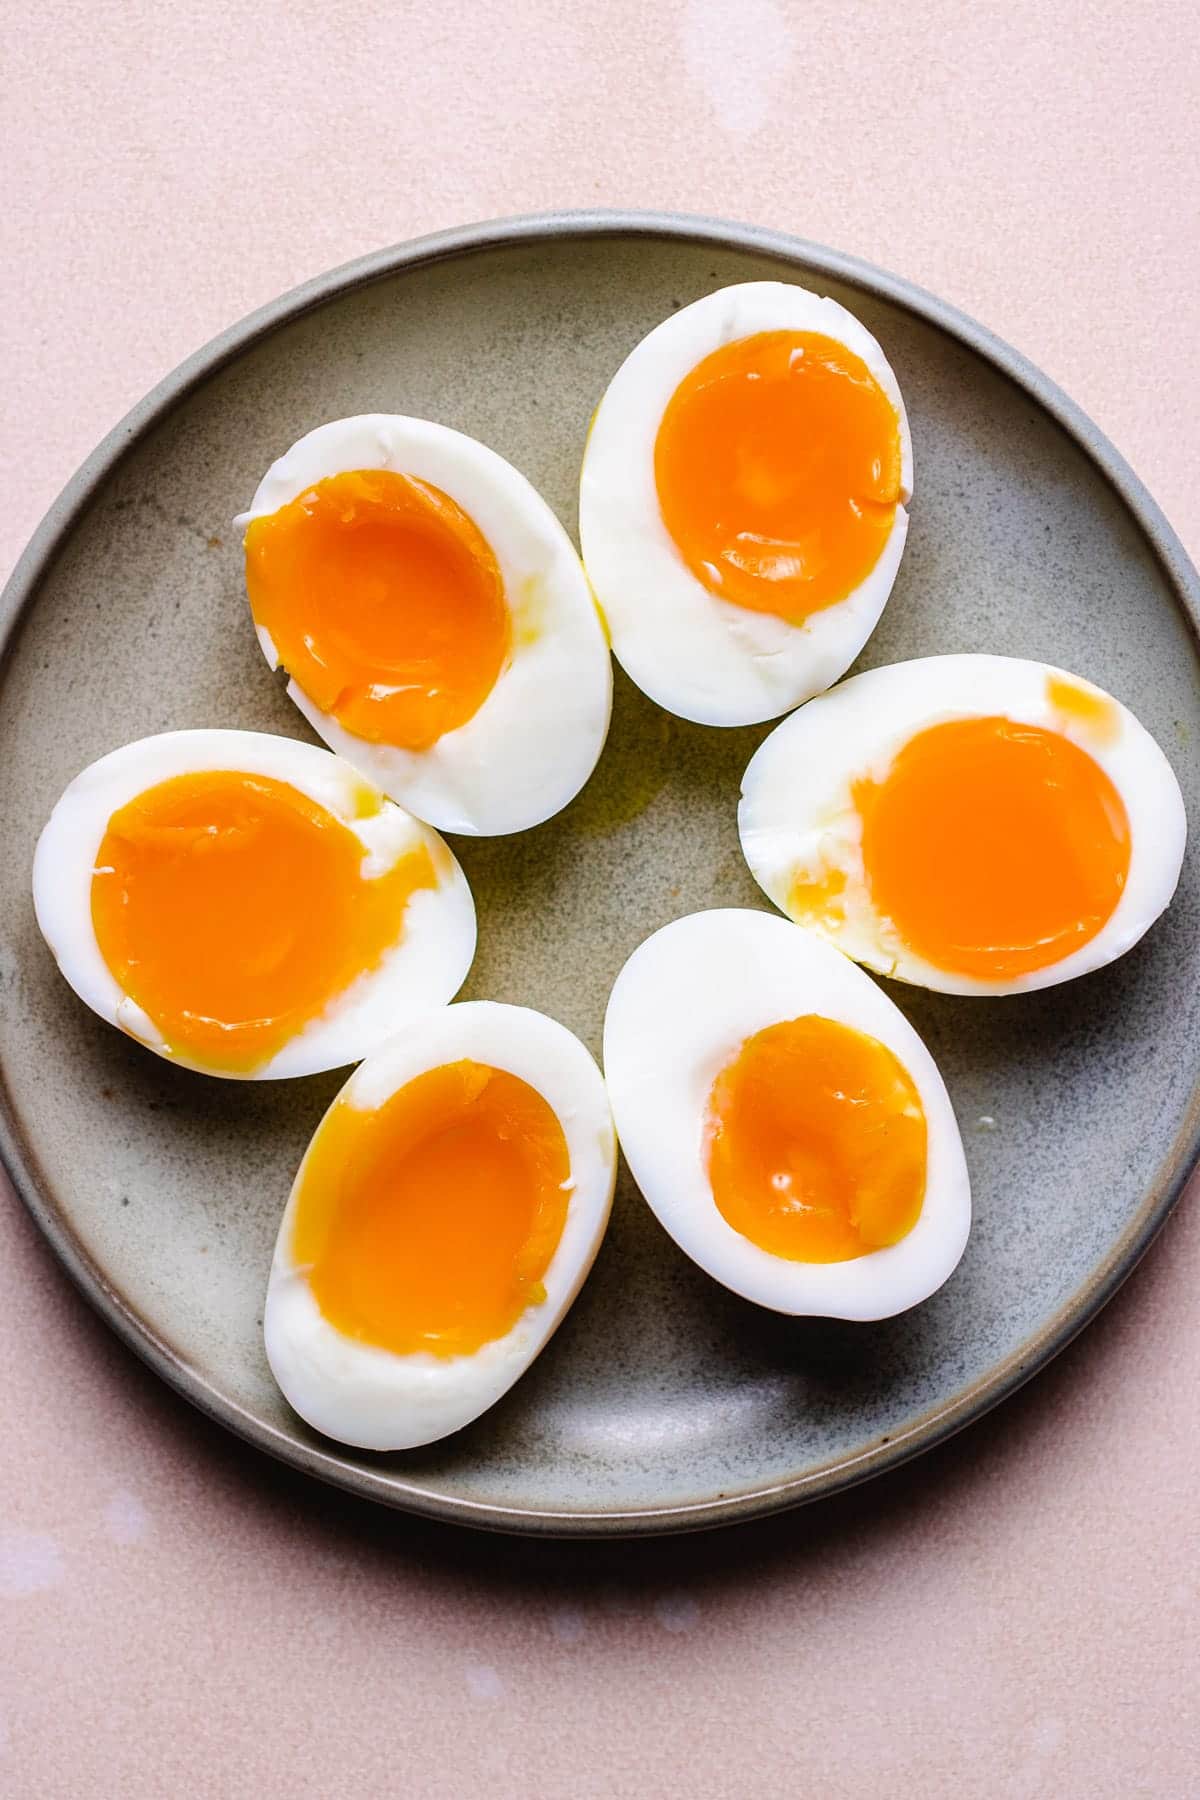 https://iheartumami.com/wp-content/uploads/2022/03/Air-Fryer-Soft-Boiled-Eggs.jpg